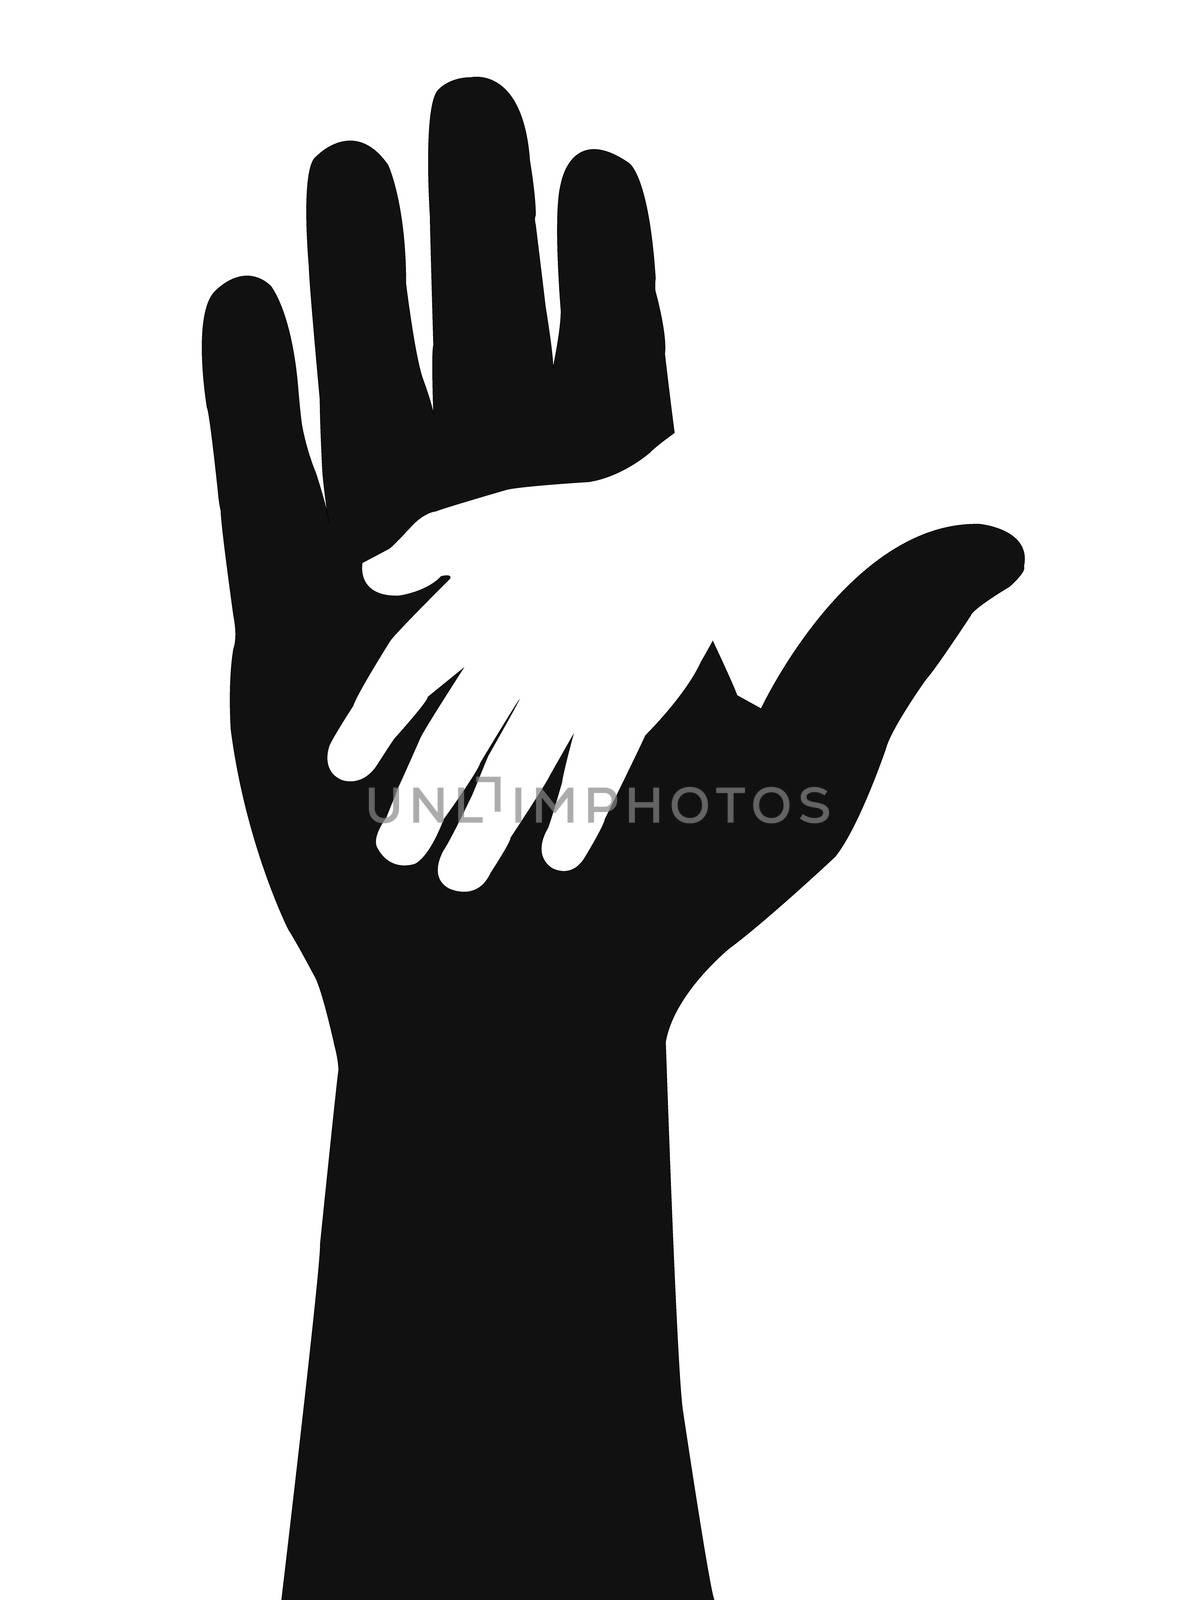 Helping hands. Vector illustration on black background by Dr.G